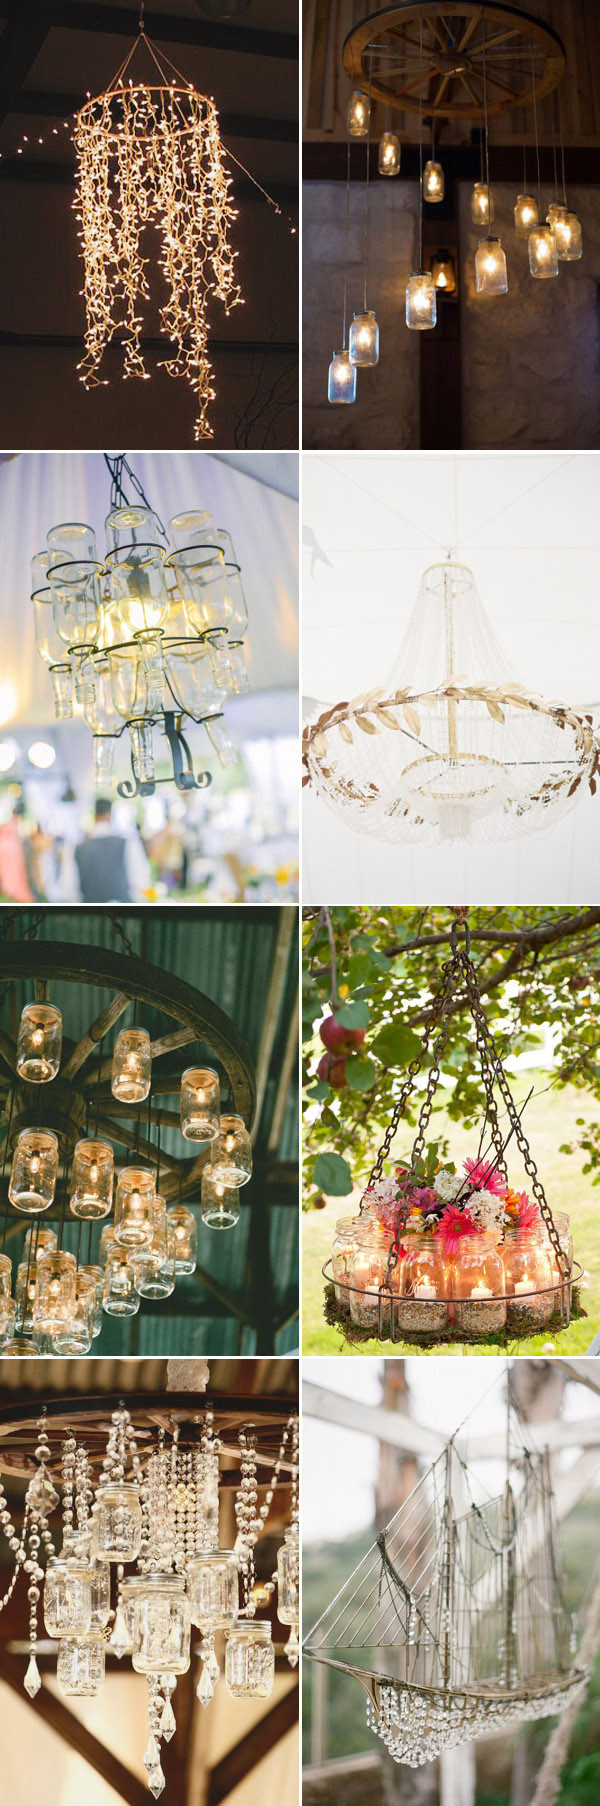 Best ideas about Wedding Decoration DIY
. Save or Pin Wedding Decorations 40 Romantic Ideas to Use Chandeliers Now.